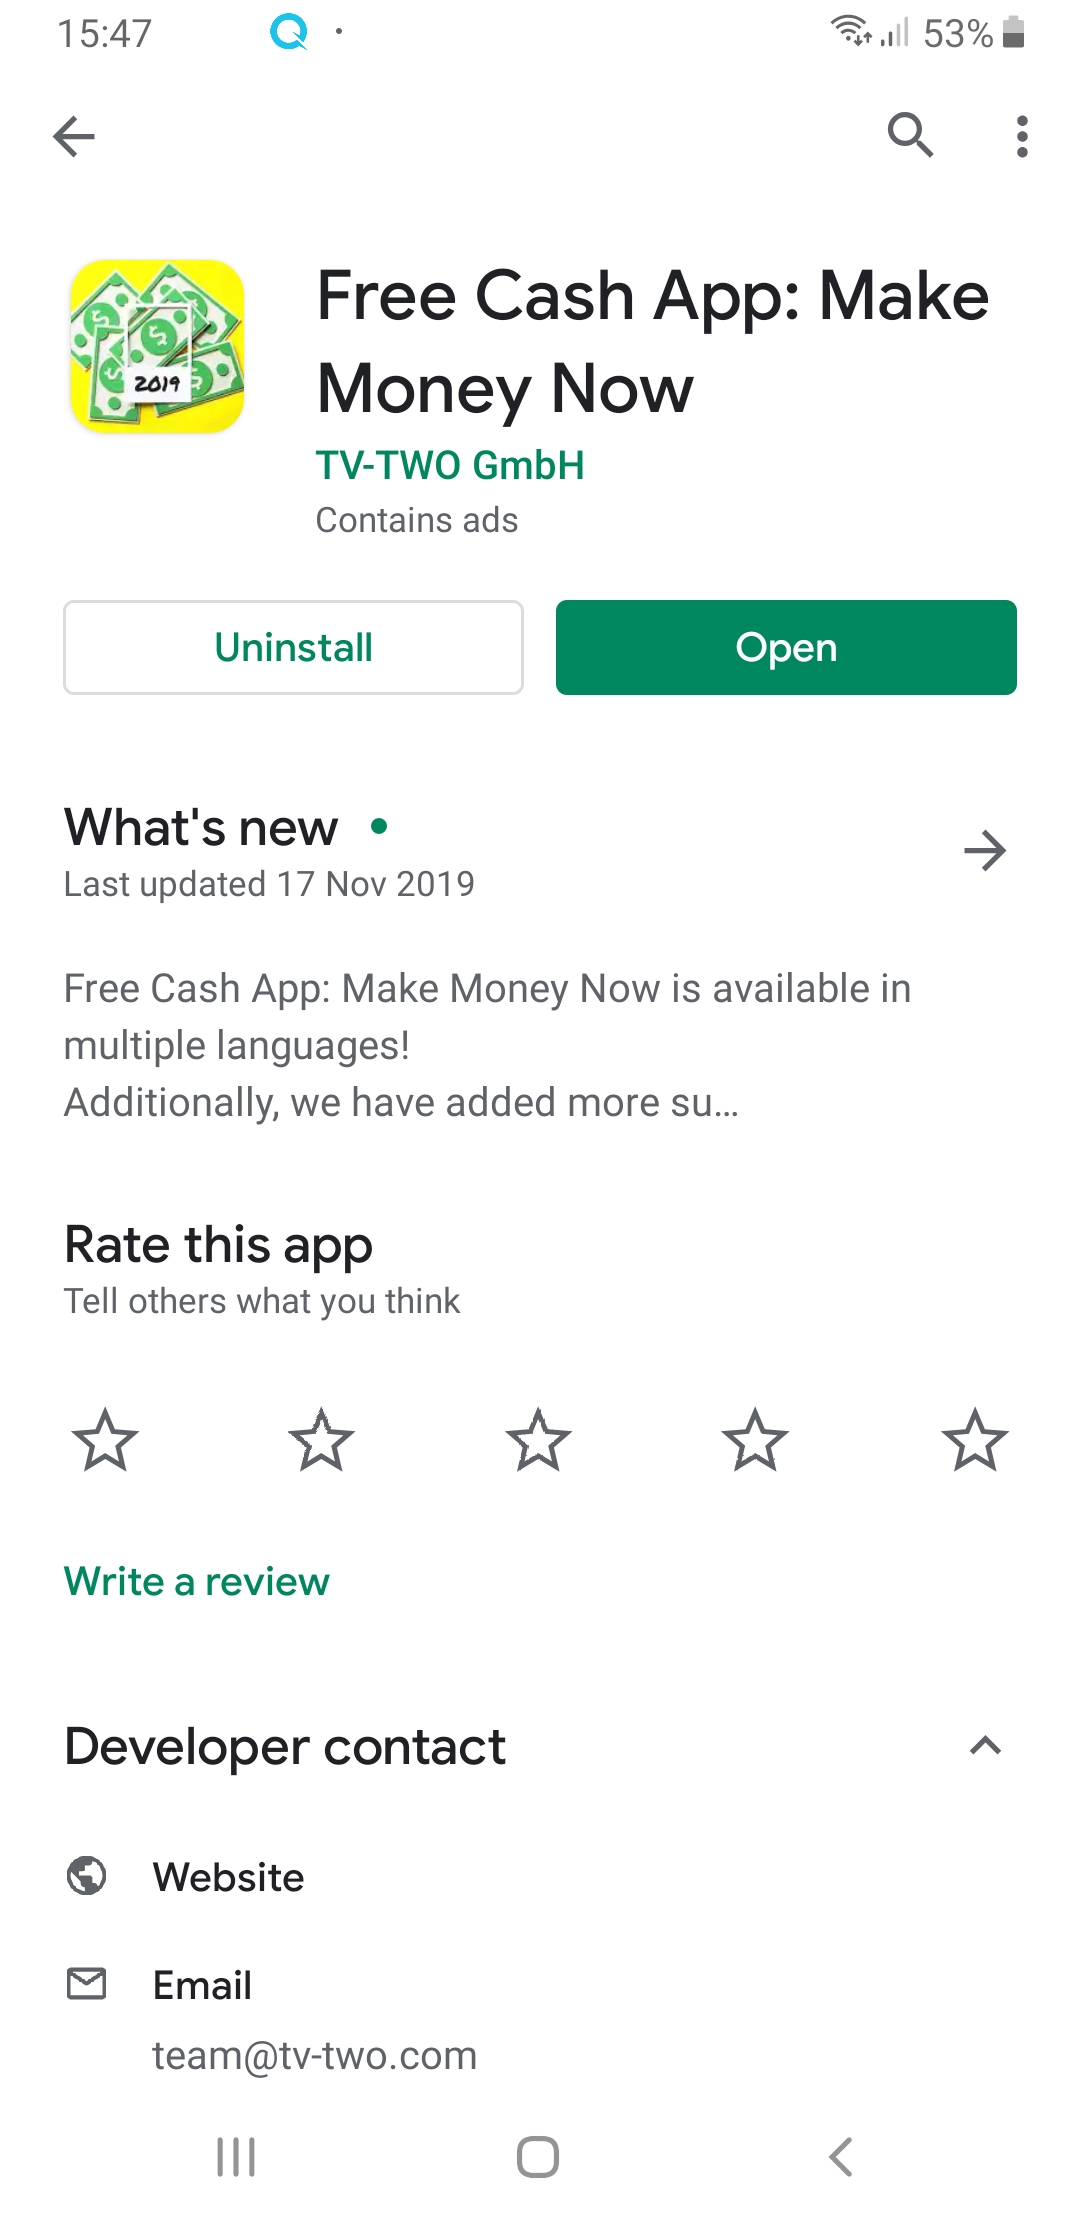 New Free Cash App Reviews Scam Or Legit Beermoneyforum Com We Help Each Other To Make Money Online